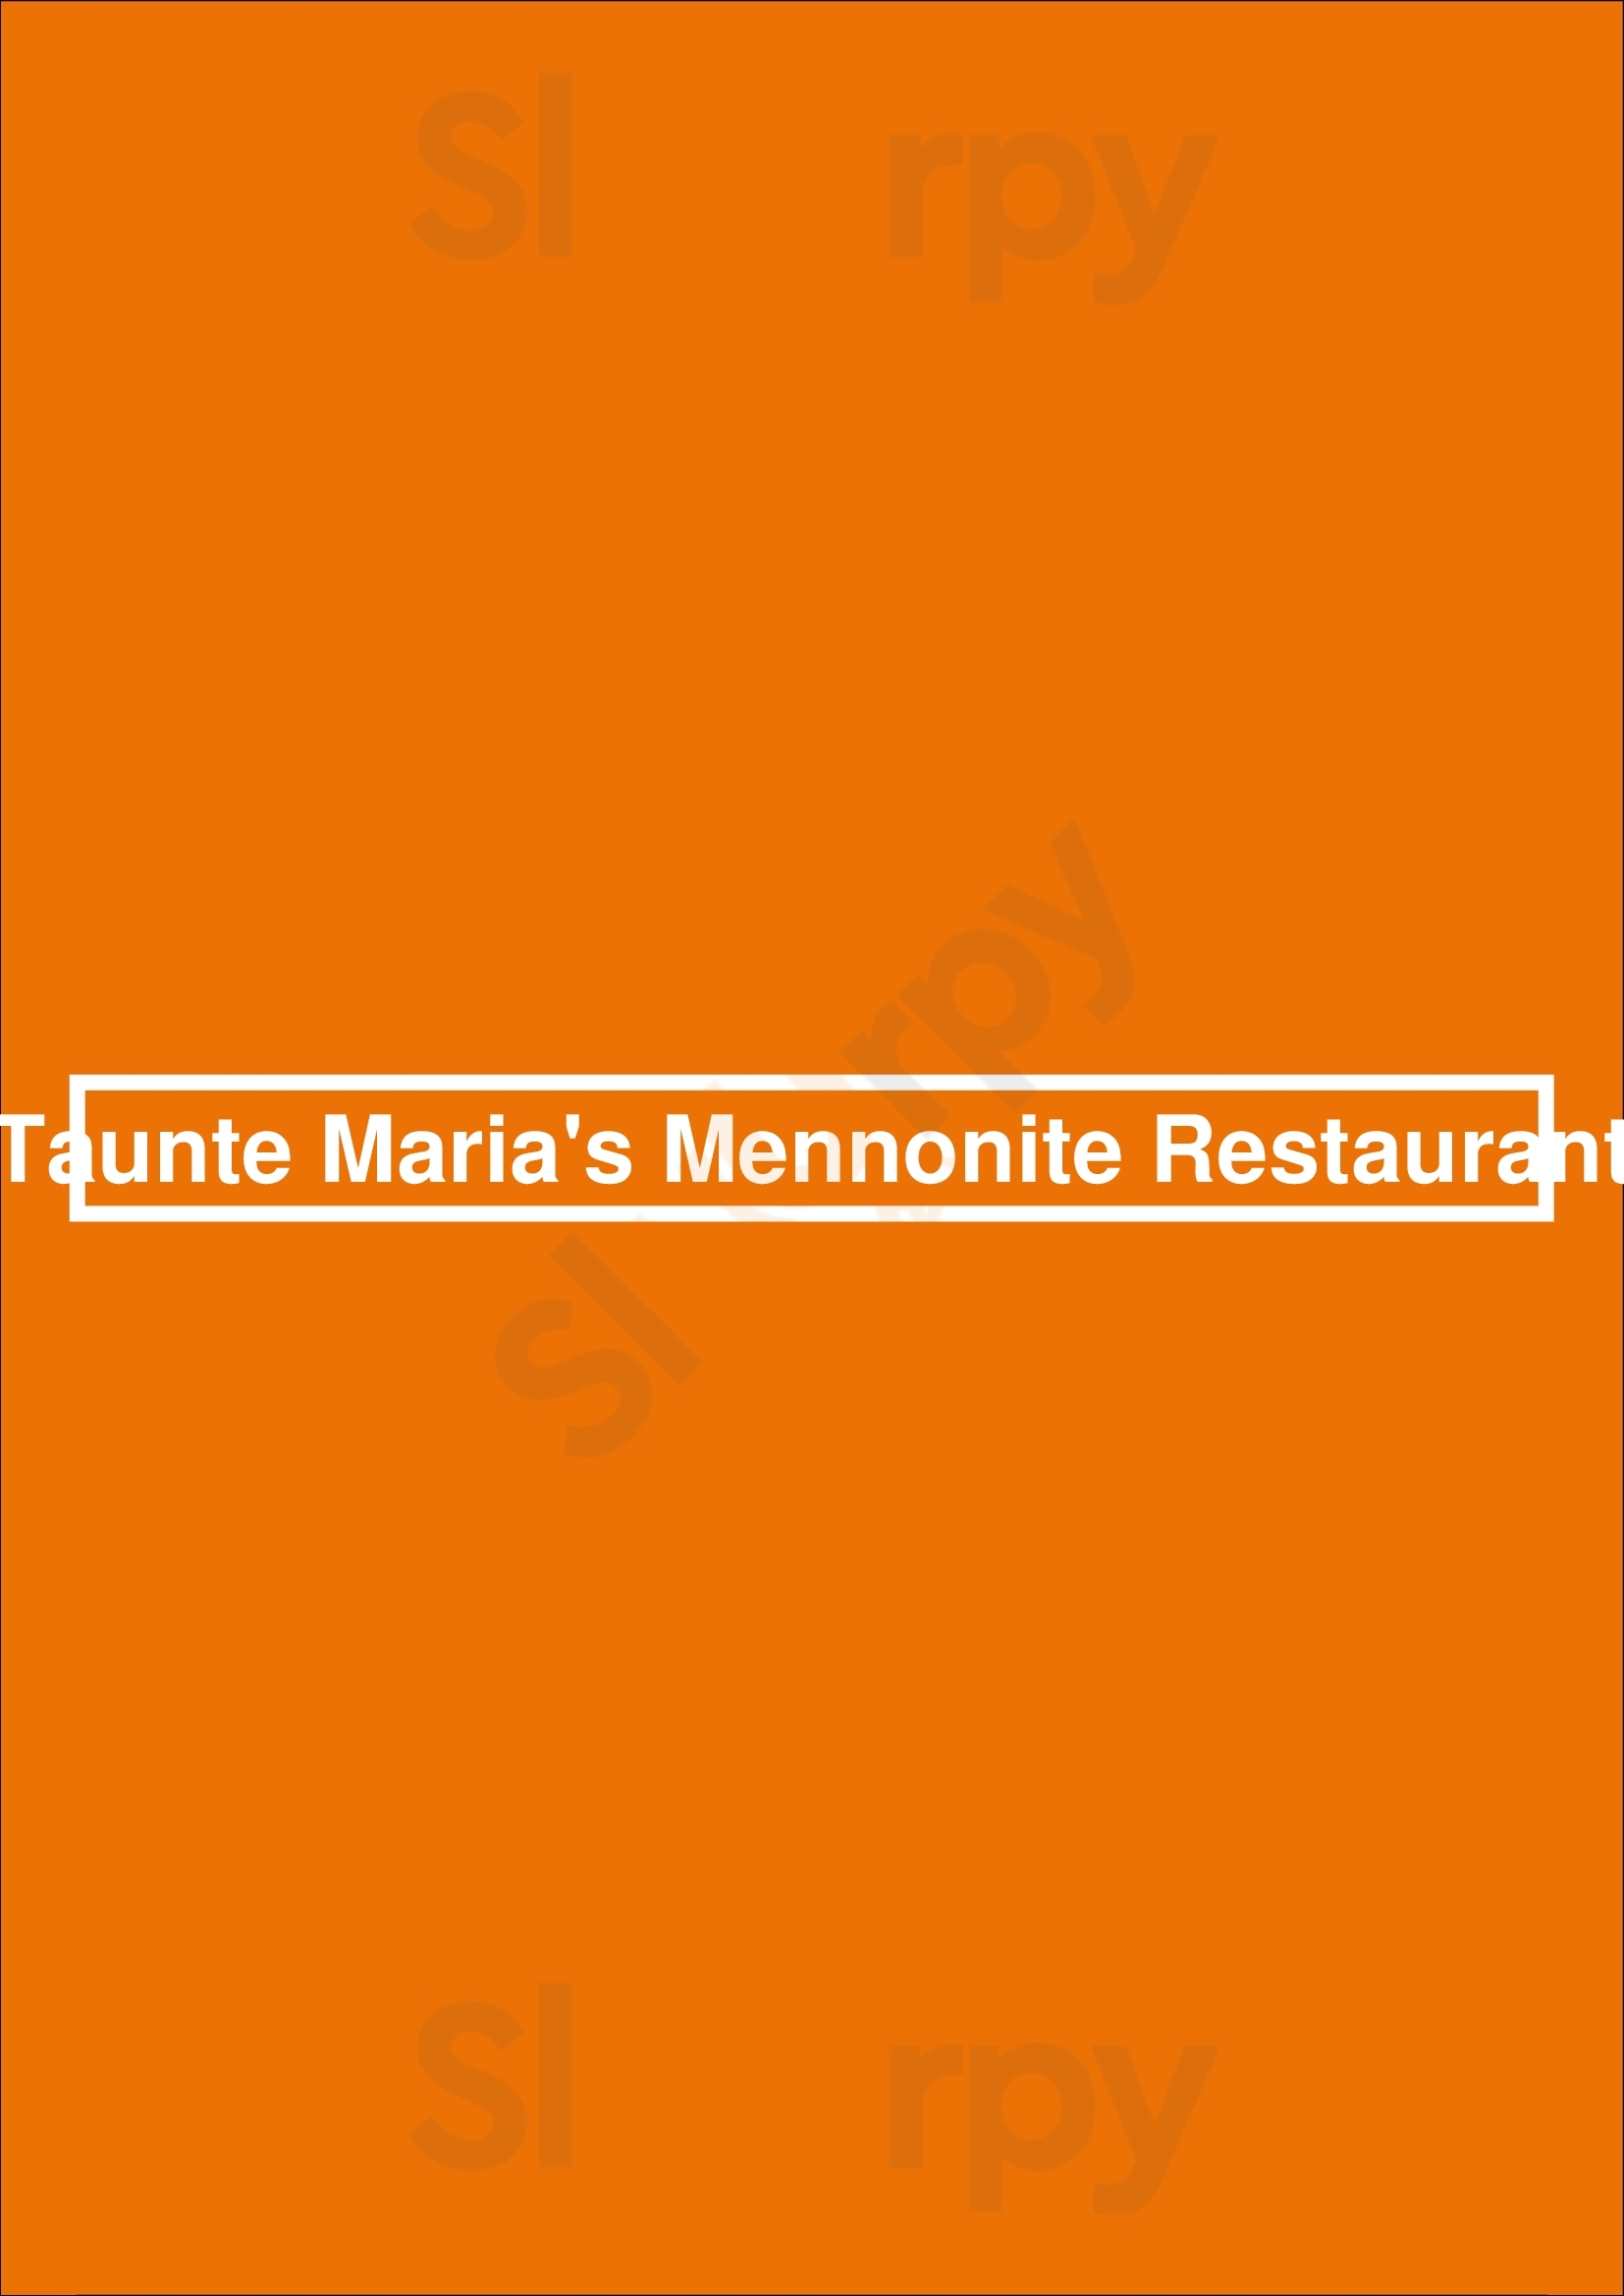 Taunte Maria's Mennonite Restaurant Saskatoon Menu - 1